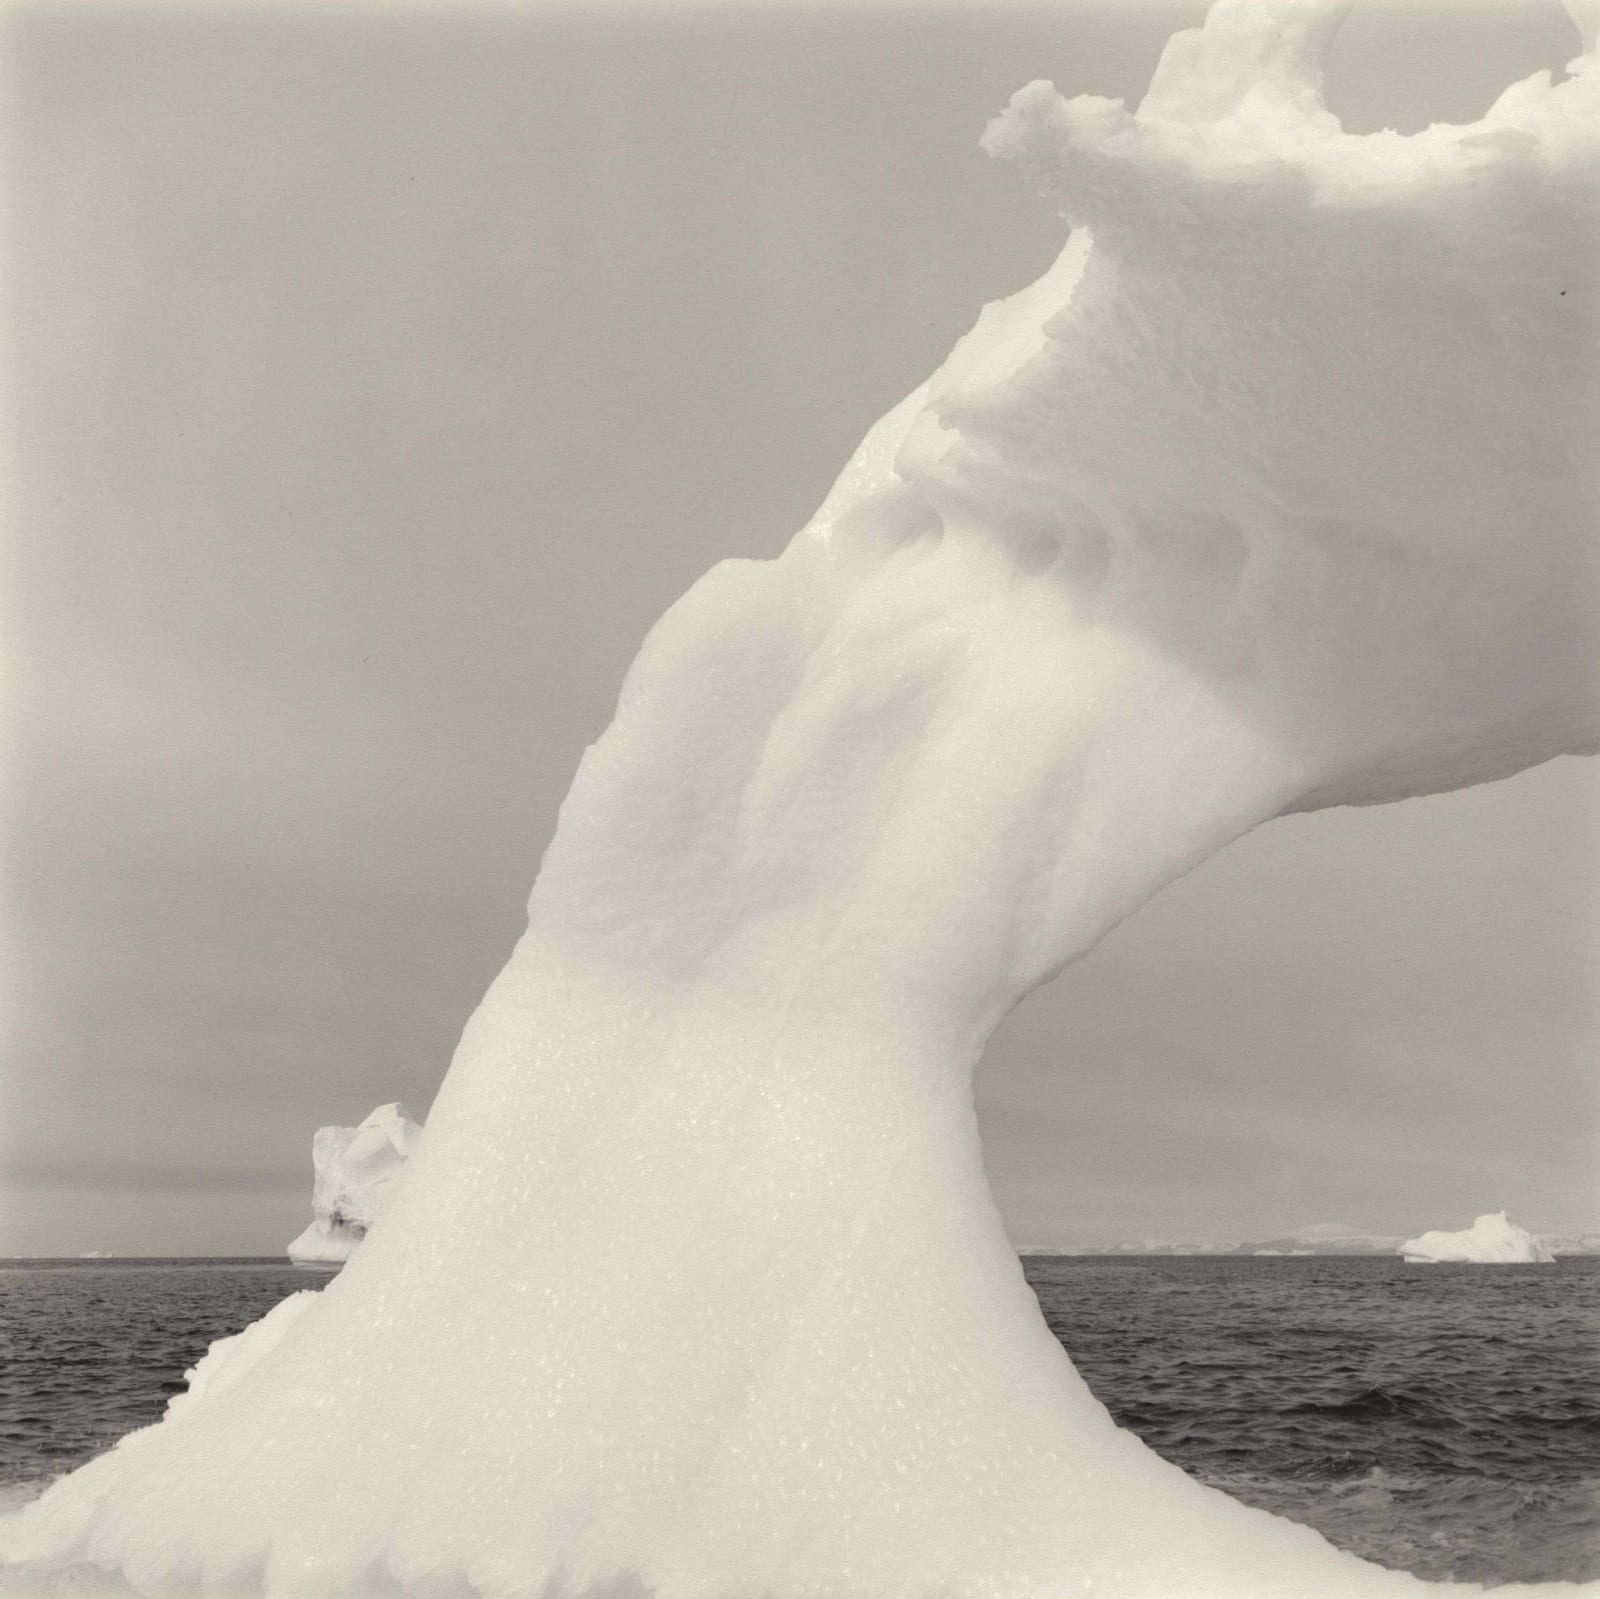 Lynn Davis photograph of Iceberg in Disko Bay, Greenland